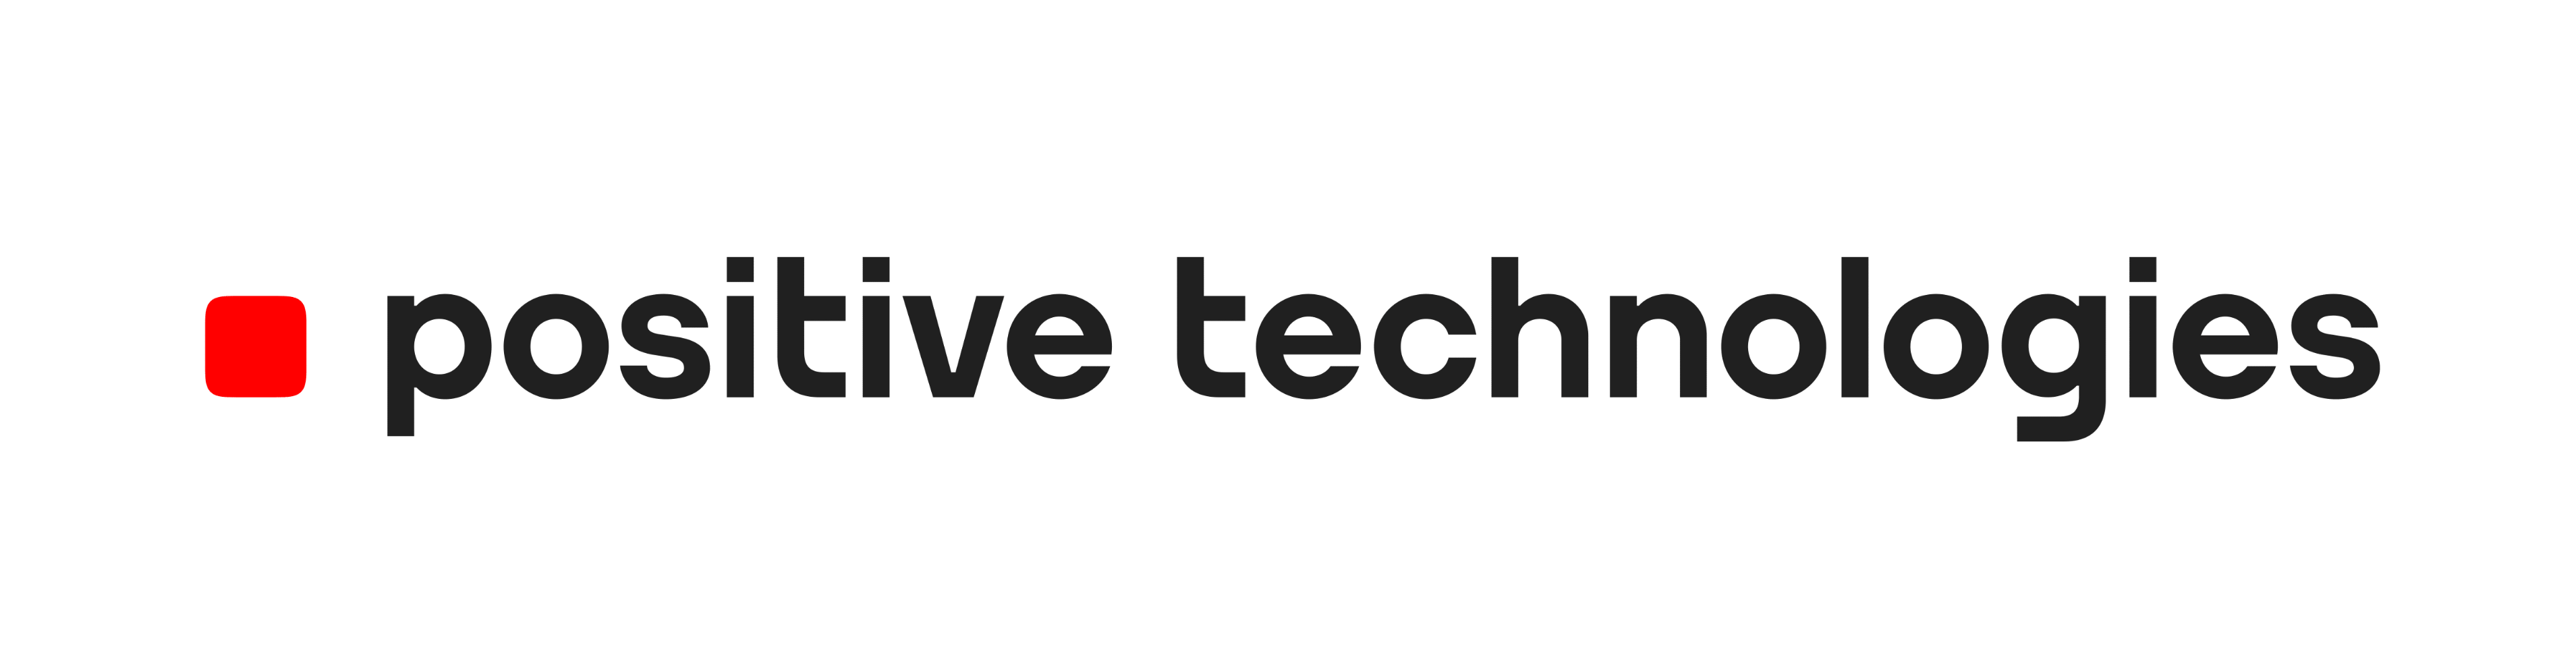 Positive_Technologies_logo_new